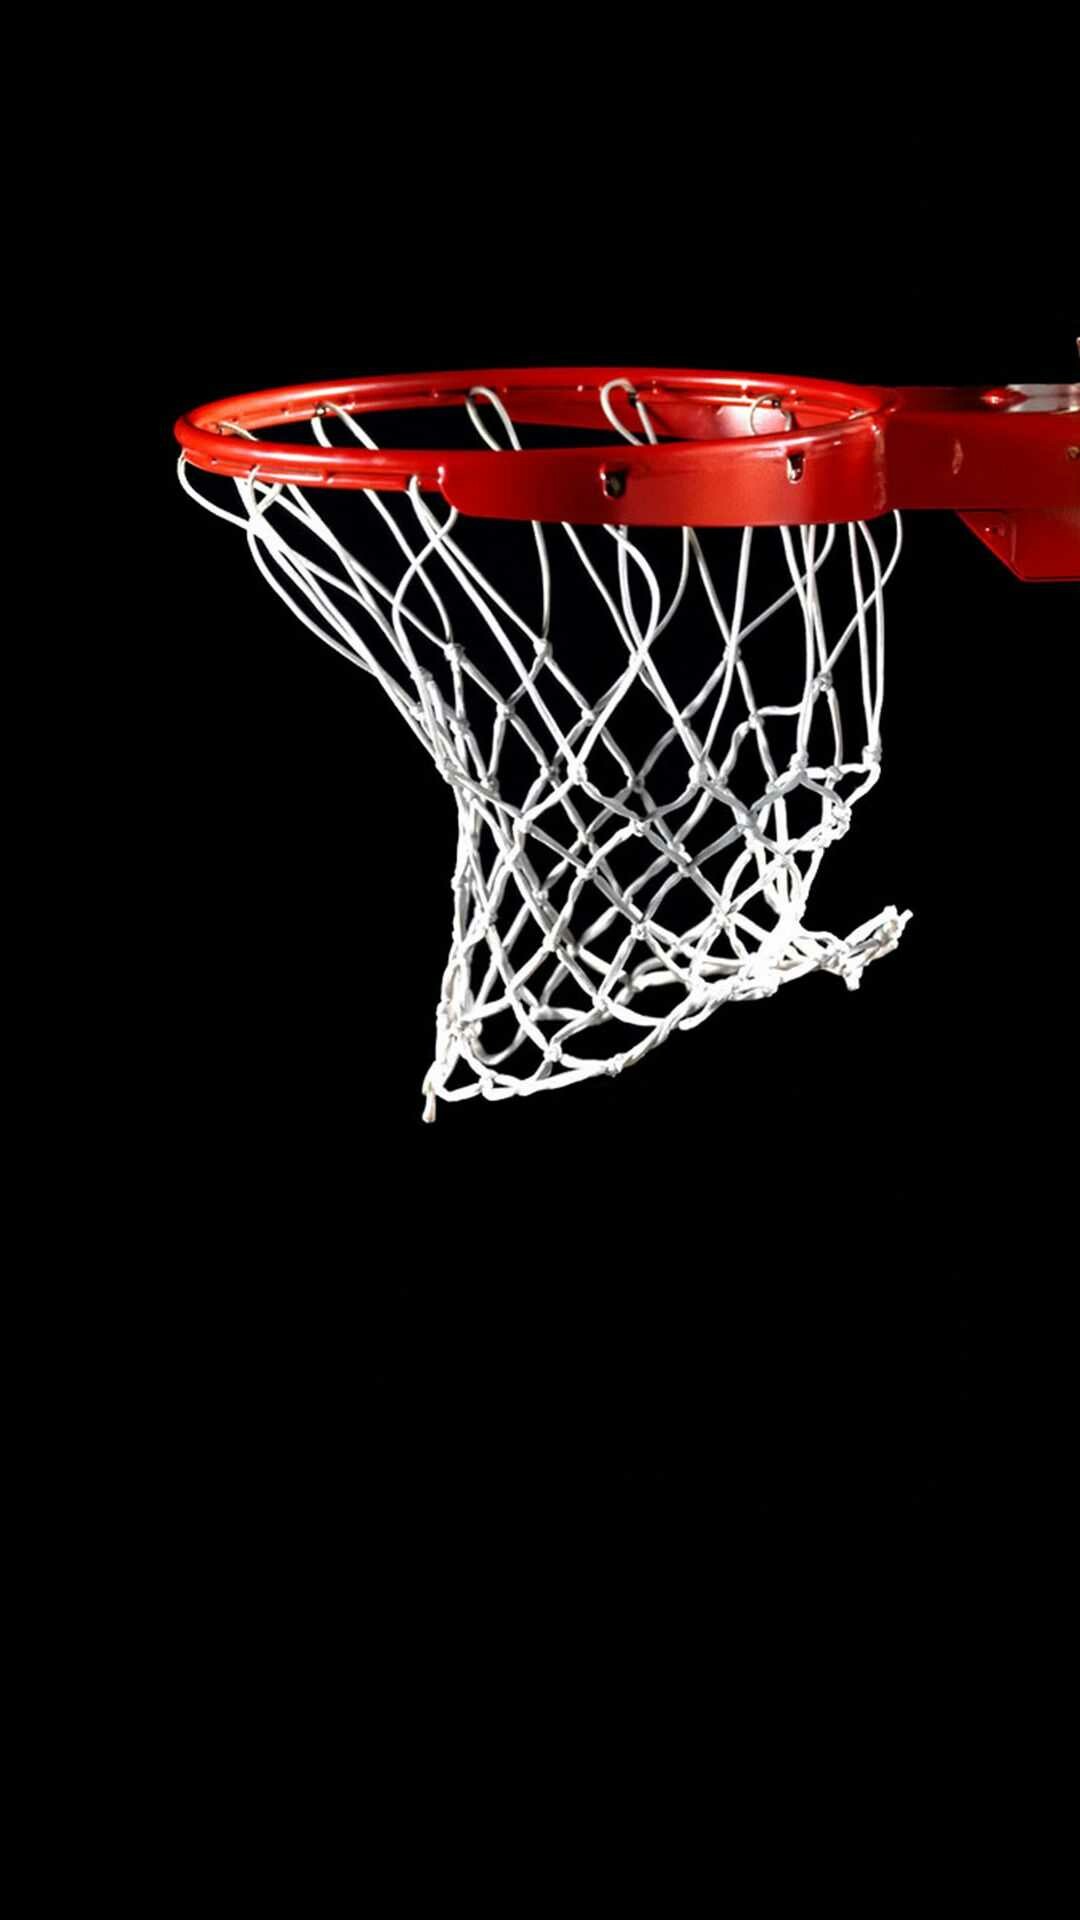 Basketball wallpaper, High-resolution image, Sports enthusiasm, Dynamic gameplay, 1080x1920 Full HD Phone